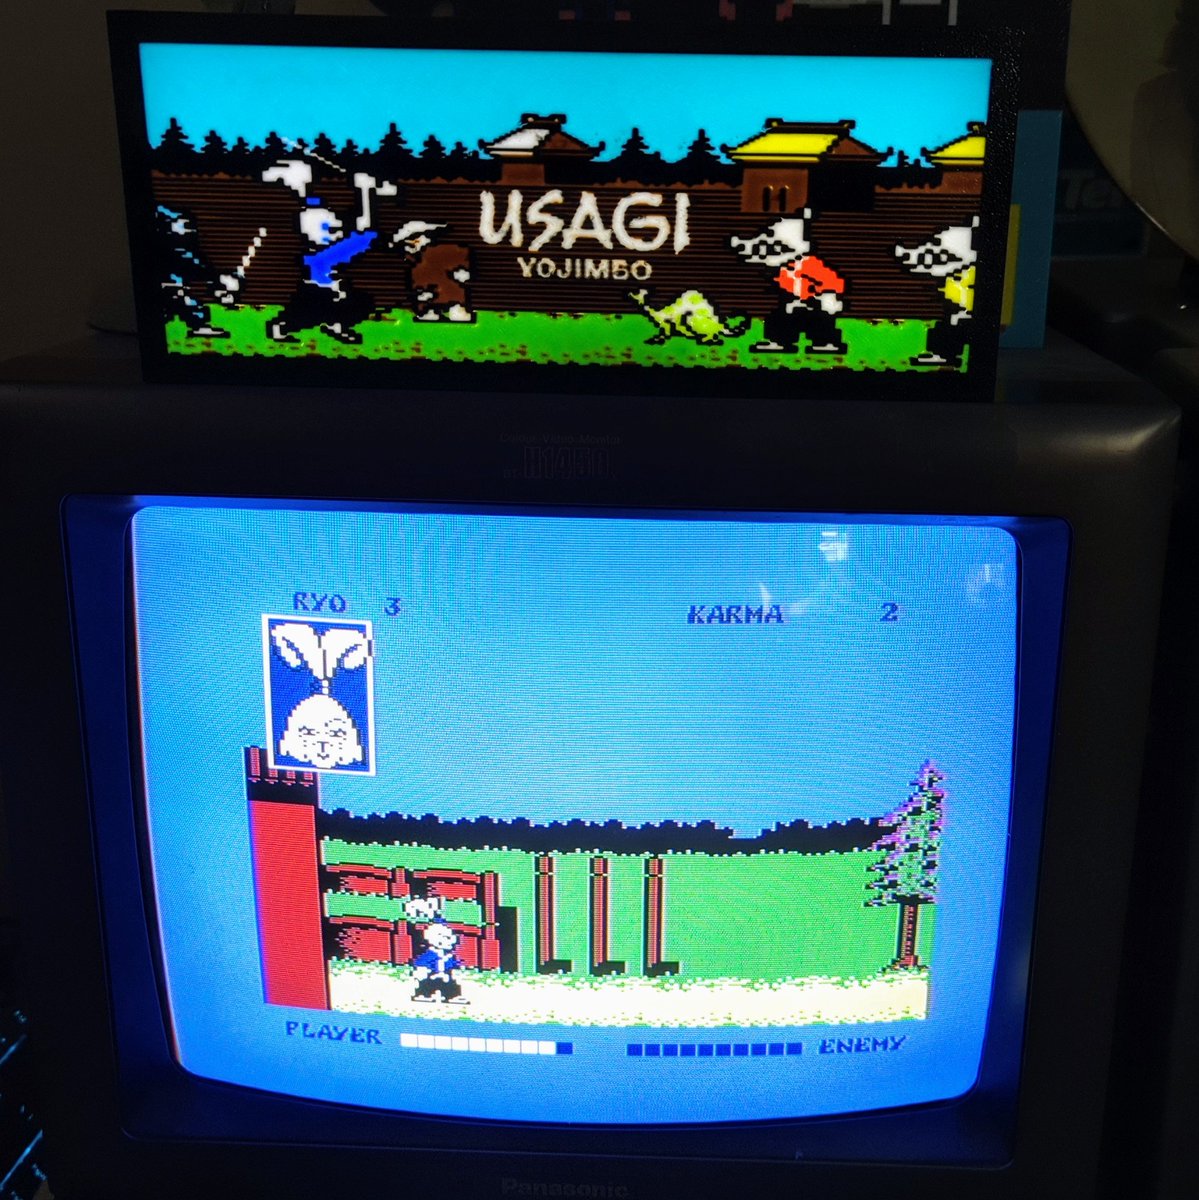 Now Available. 
Pixel Memories lightbox for Usagi Yojimbo on the Commodore 64.

#Commodore64 #C64 #C64Reposts #UsagiYojimbo

ebay.com.au/itm/1561905838…